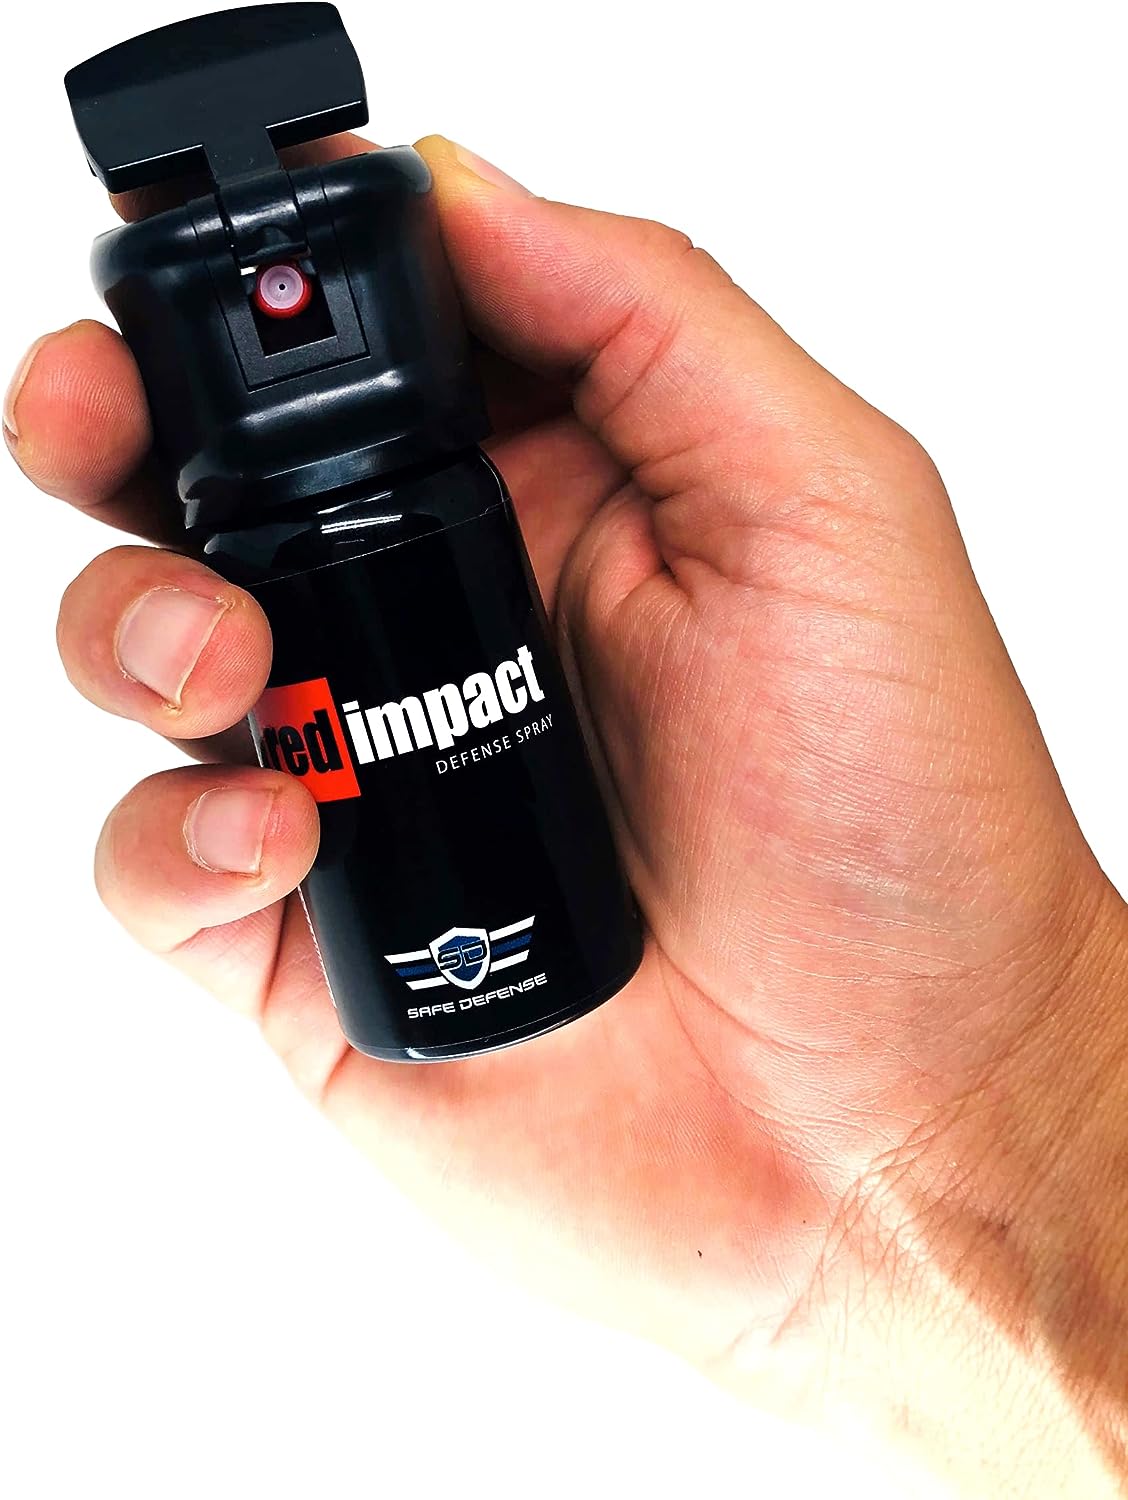 redimpact spray anti agression de poche gel 40 ml review